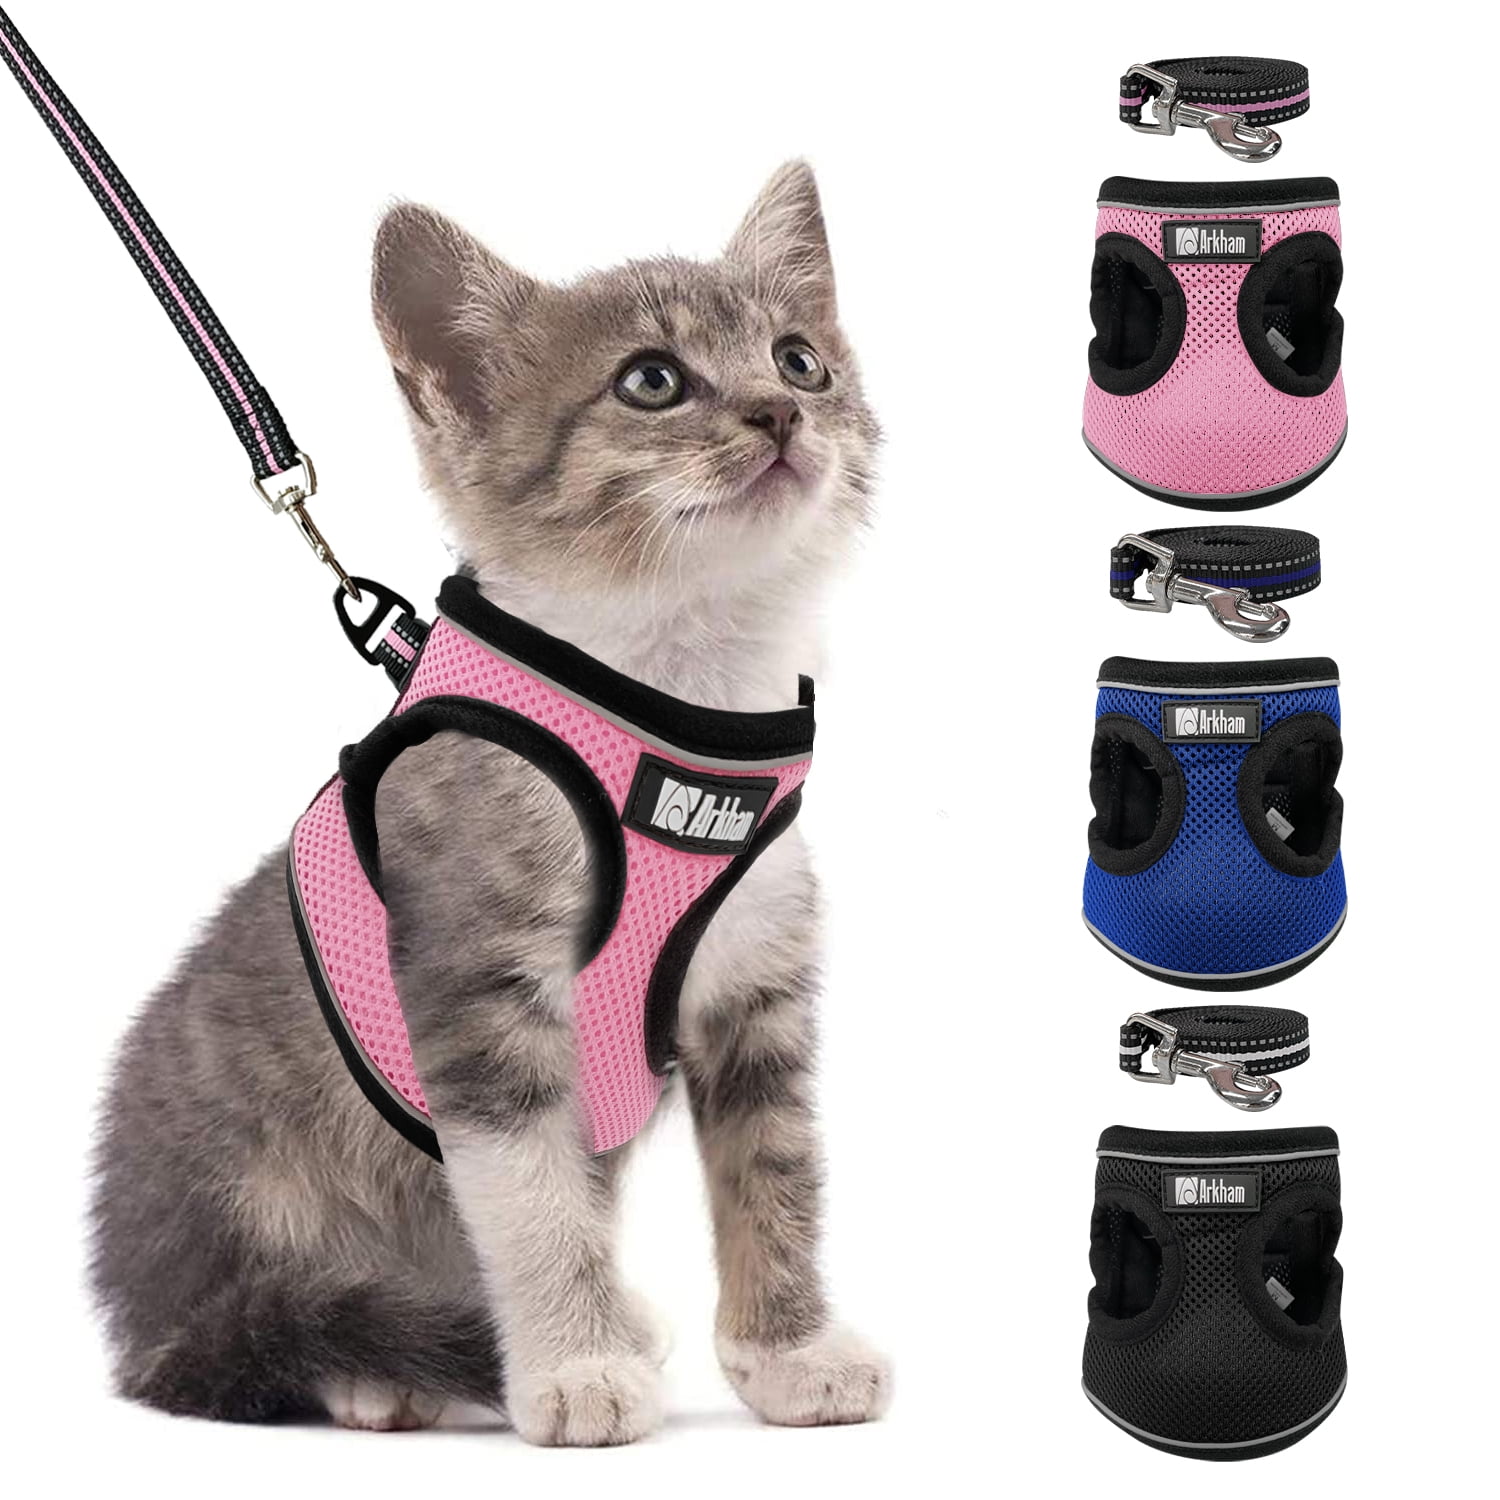 BEIJIA Escape Proof Cat Vest Harness with Leash Adjustable Soft Mesh Comfort Fit for Pet or Puppy Dog Rabbit 